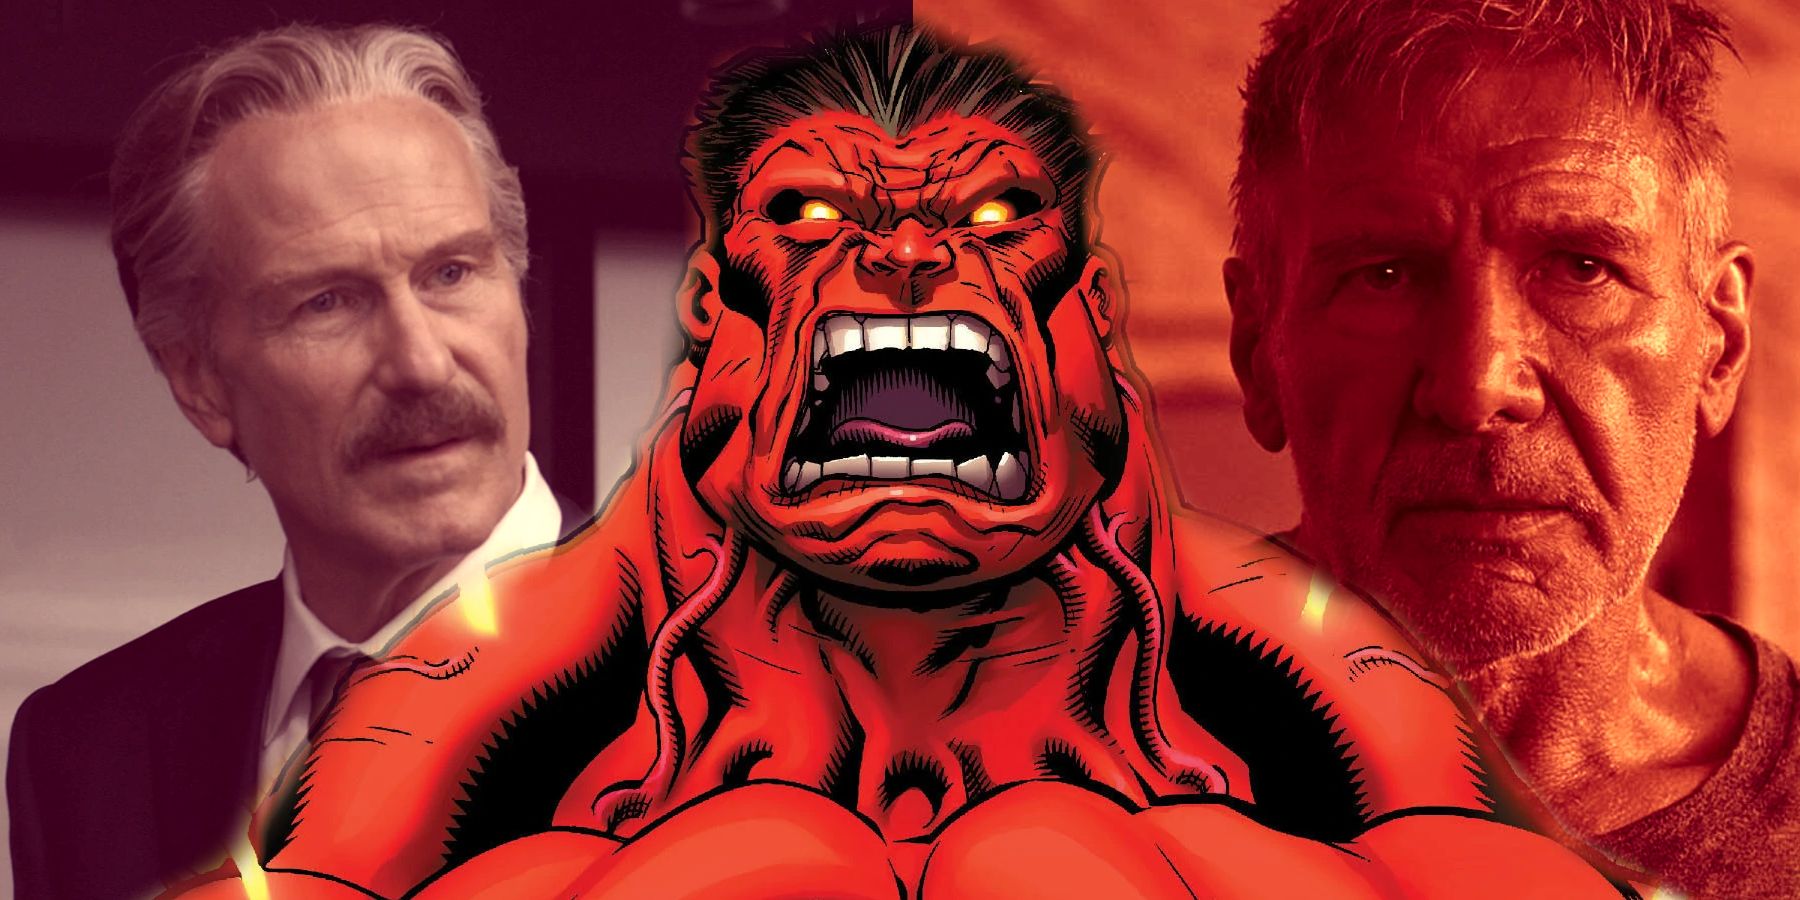 Split Image: General Ross (William Hurt) looks concerned; comic book Red Hulk screams in rage; Harrison Ford as Deckard Shaw in Blade Runner 2049